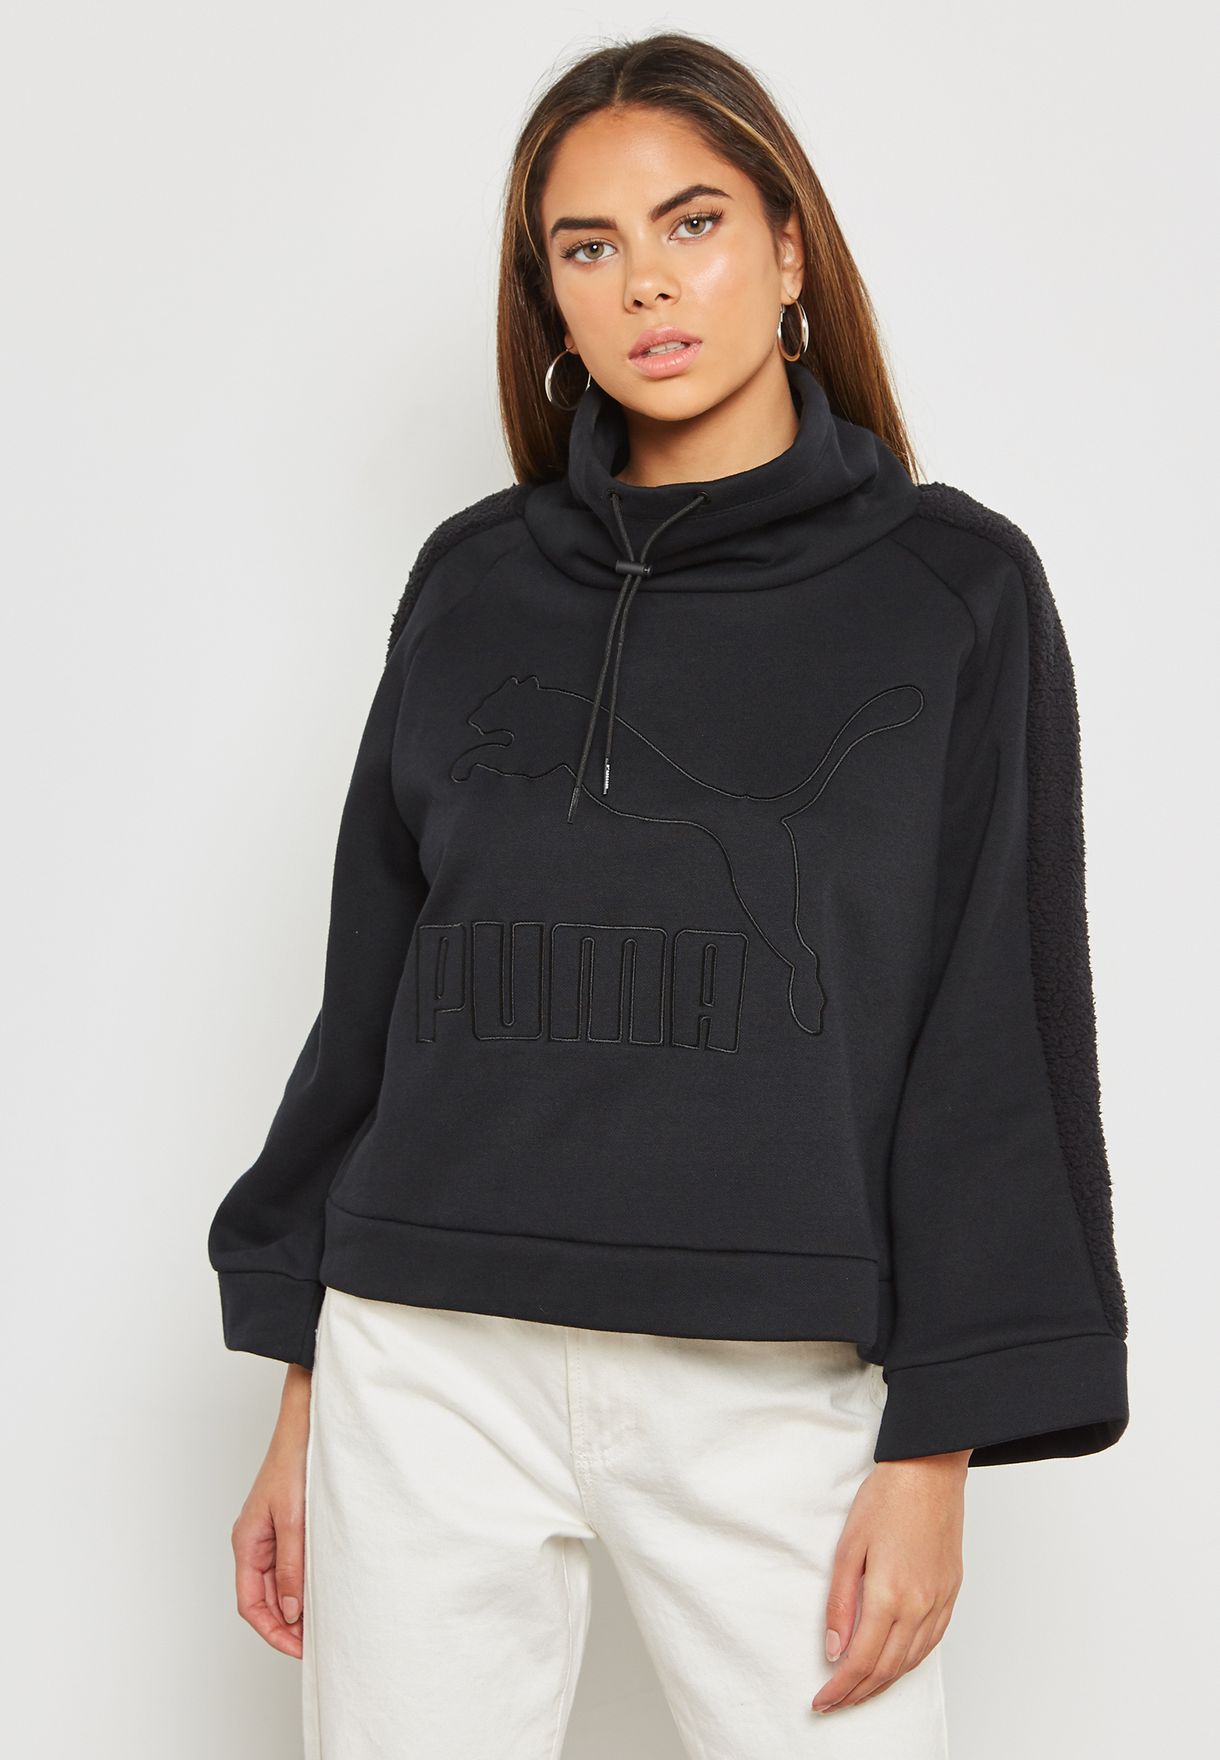 puma winterized zip up hoodie